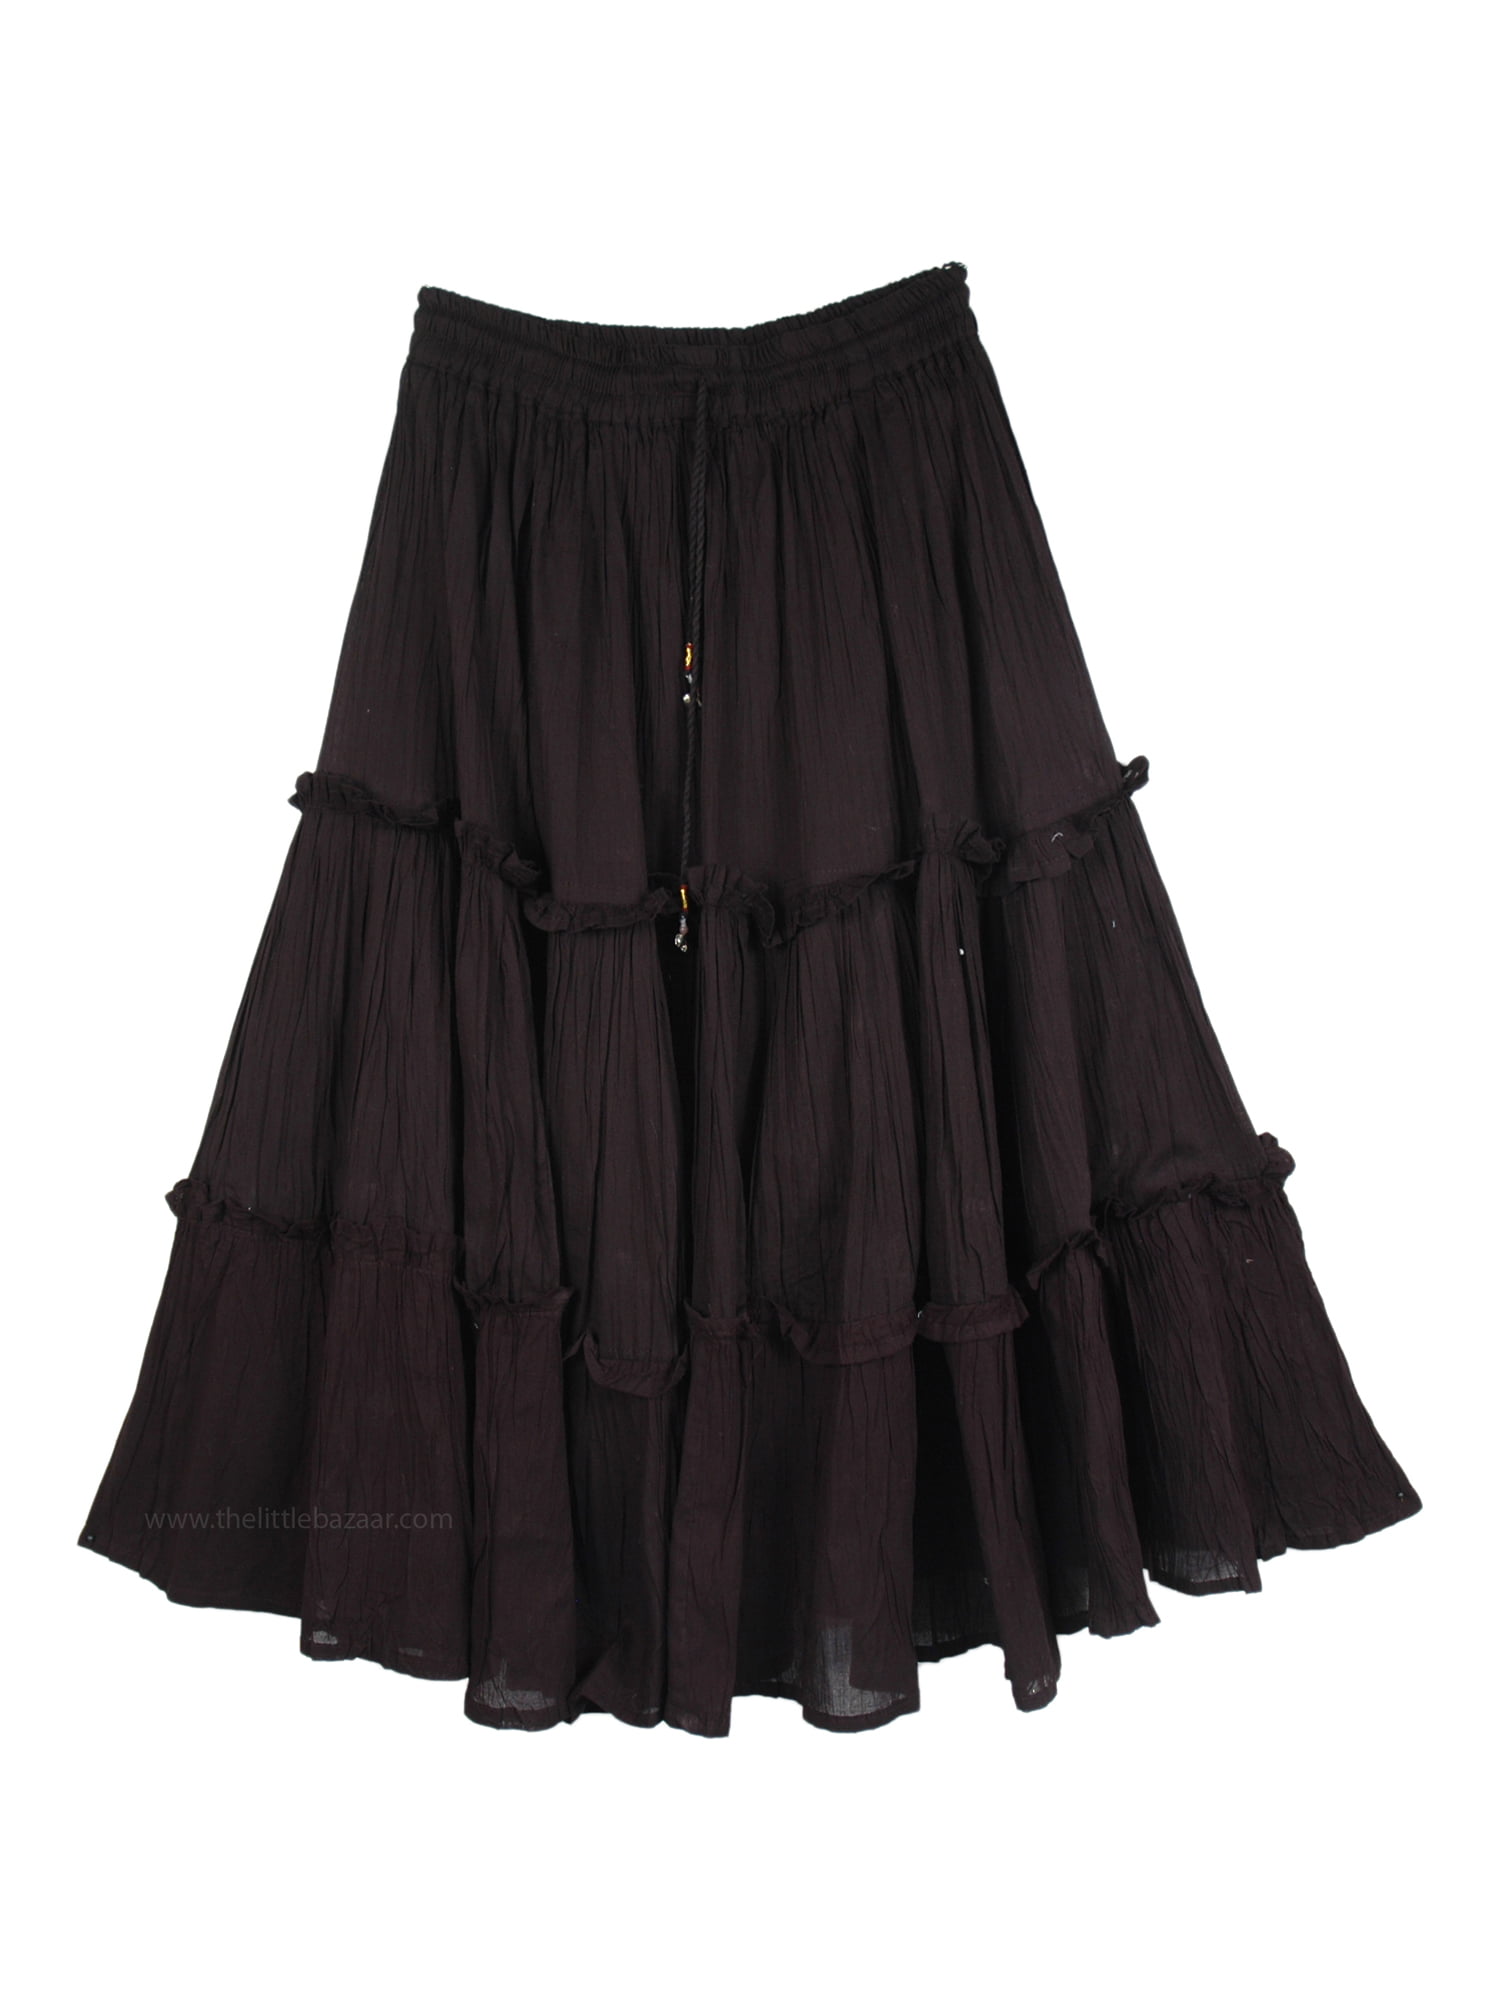 Tiered Cotton Black Midi Length Summer Skirt - Walmart.com